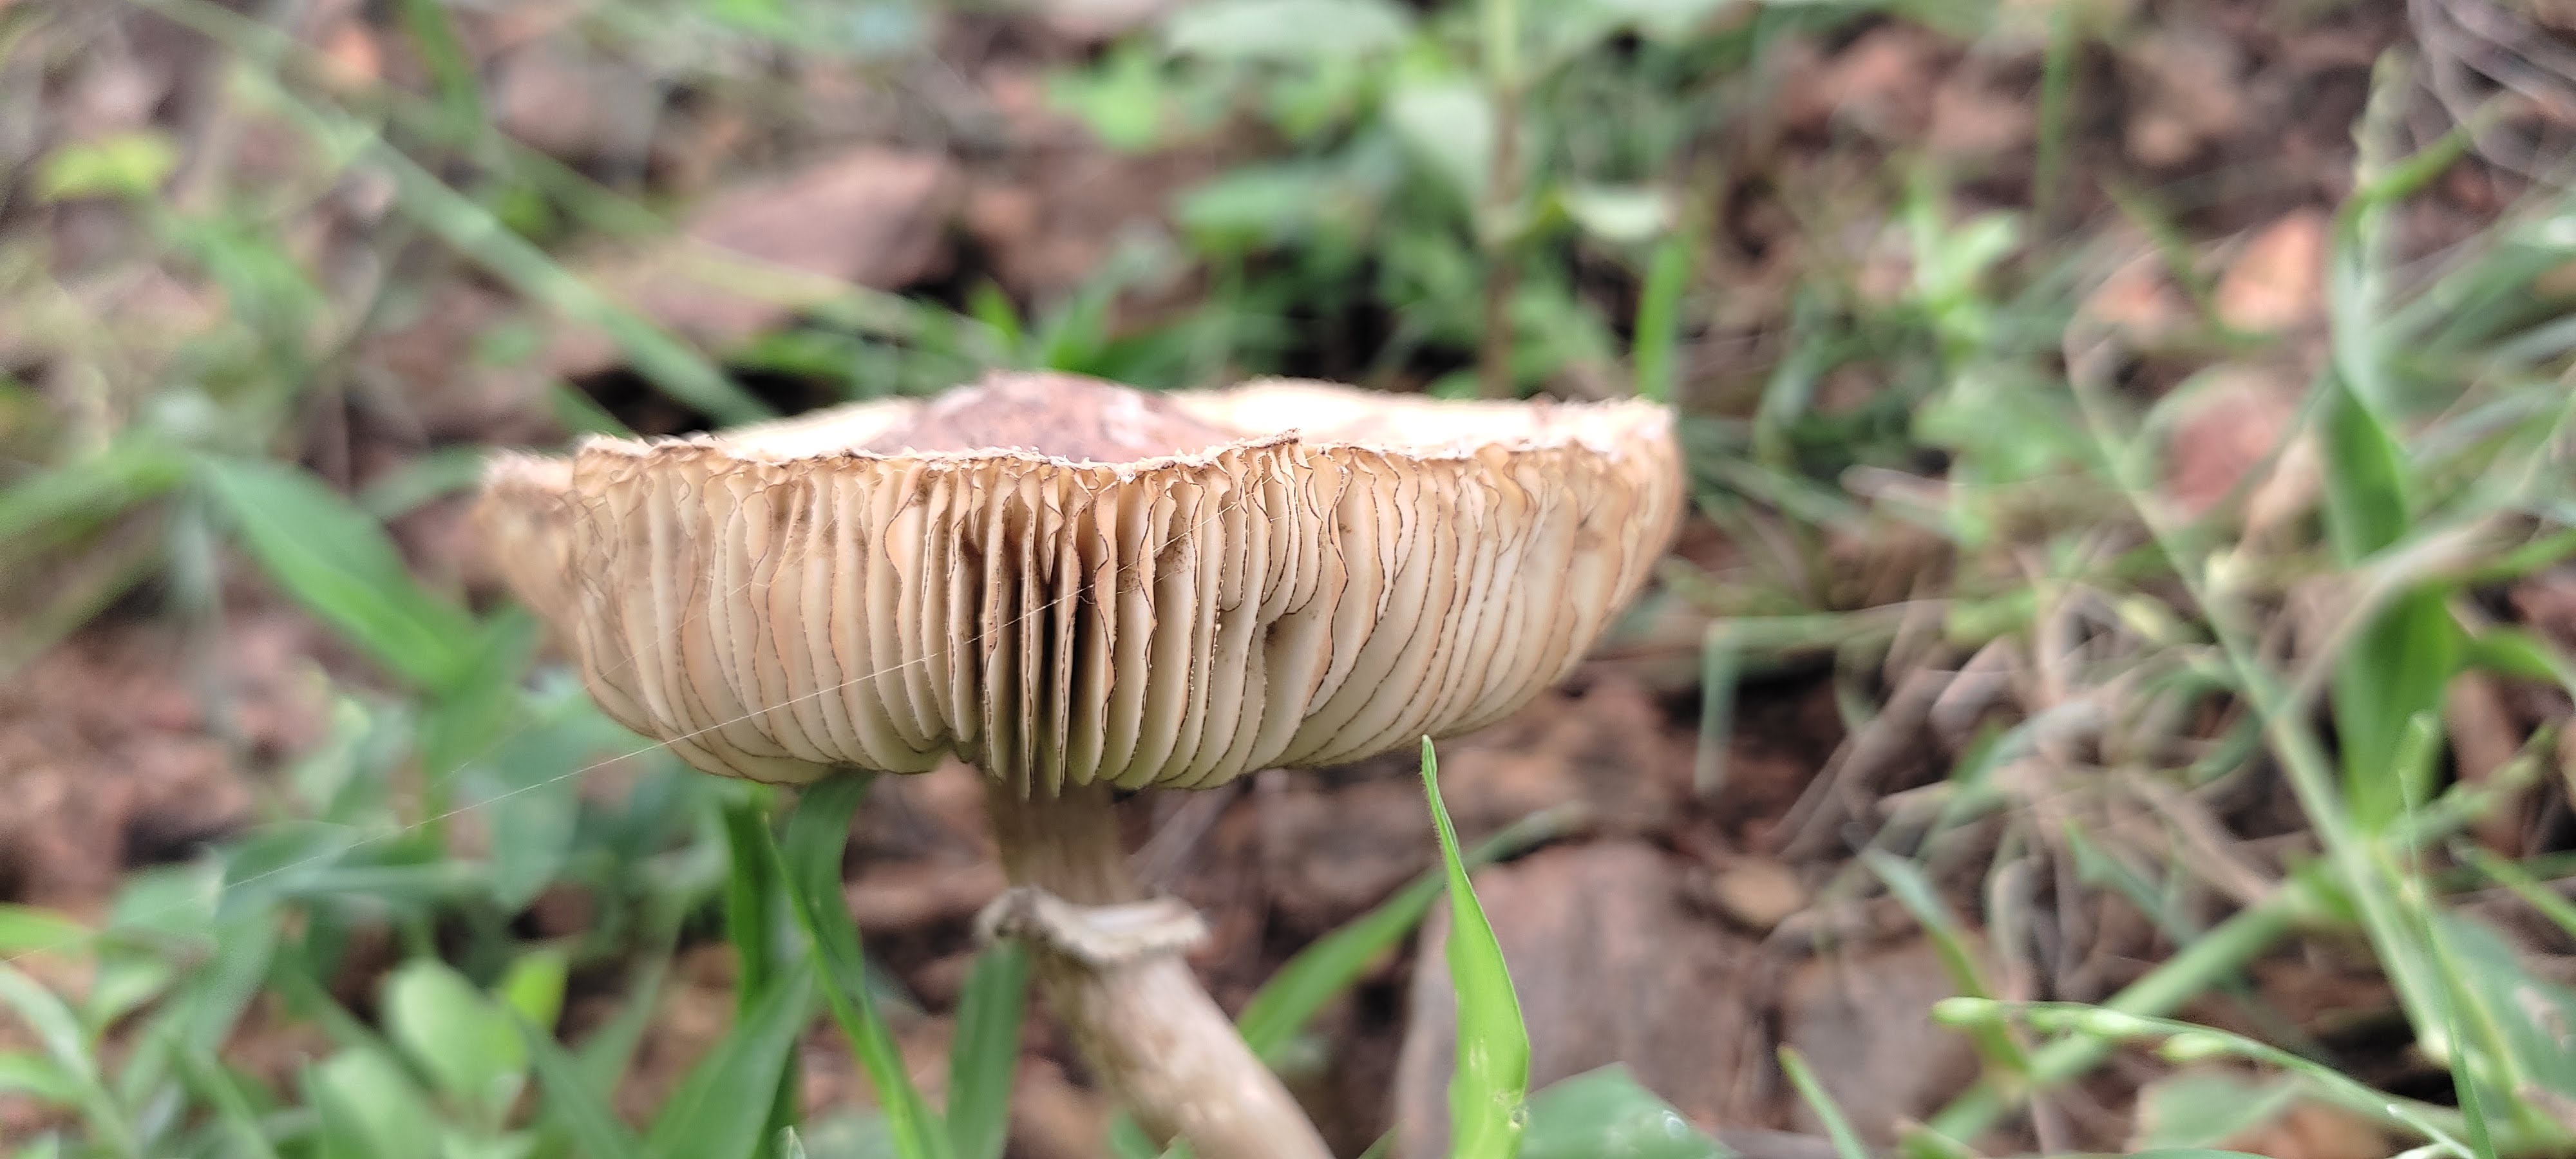 an unidentified mushroom